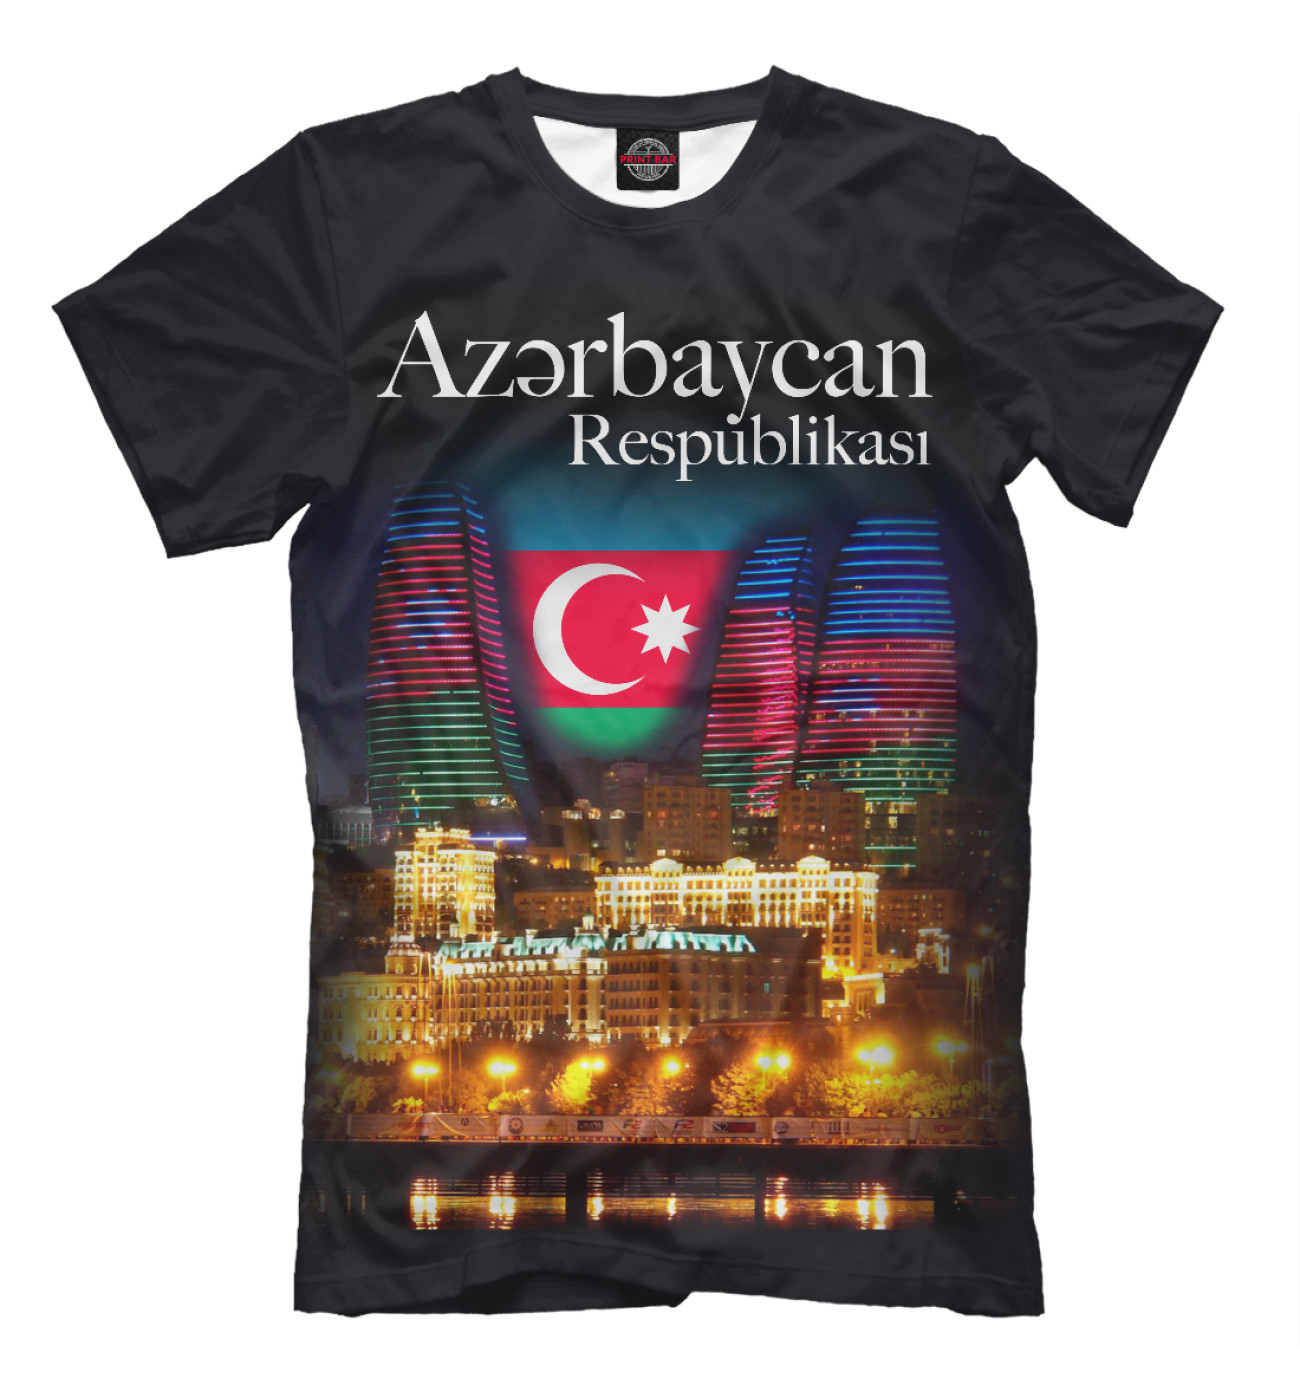 Мужская Футболка Азербайджанская Республика, артикул: AZR-305341-fut-2